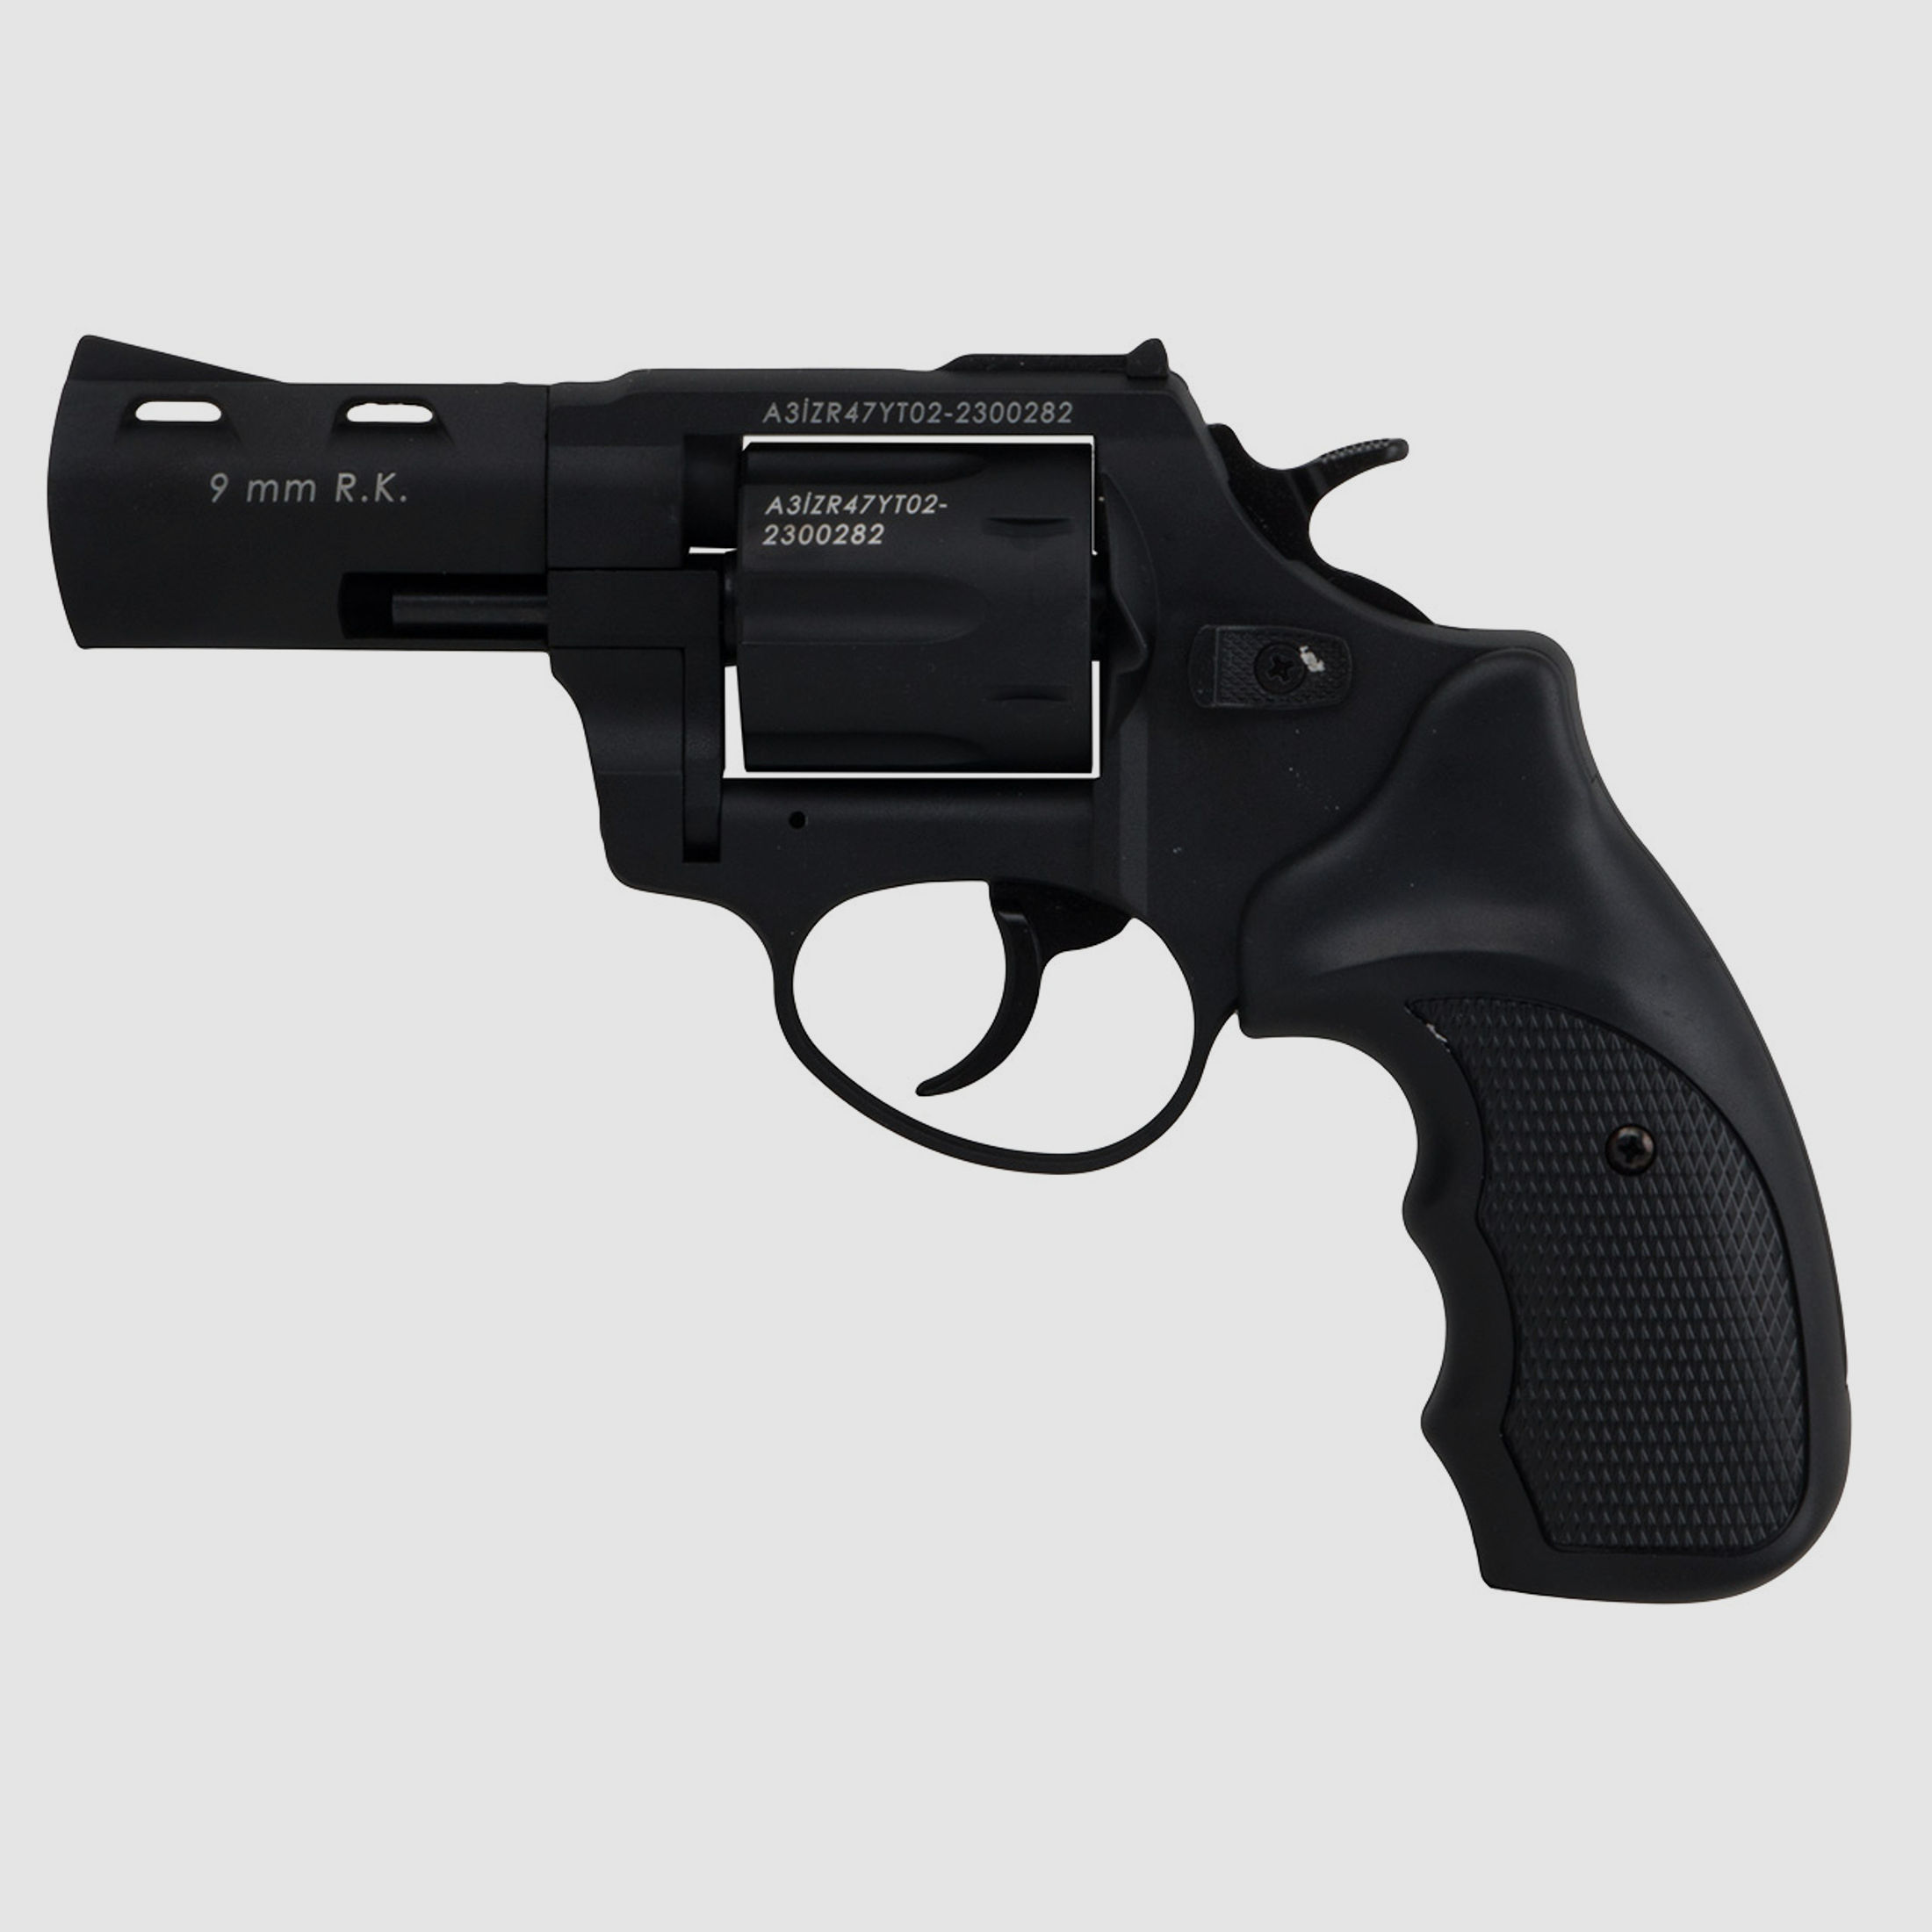 Schreckschuss Revolver Zoraki R2 Black 3 Zoll PTB 1084 Kaliber 9 mm R.K. (P18)